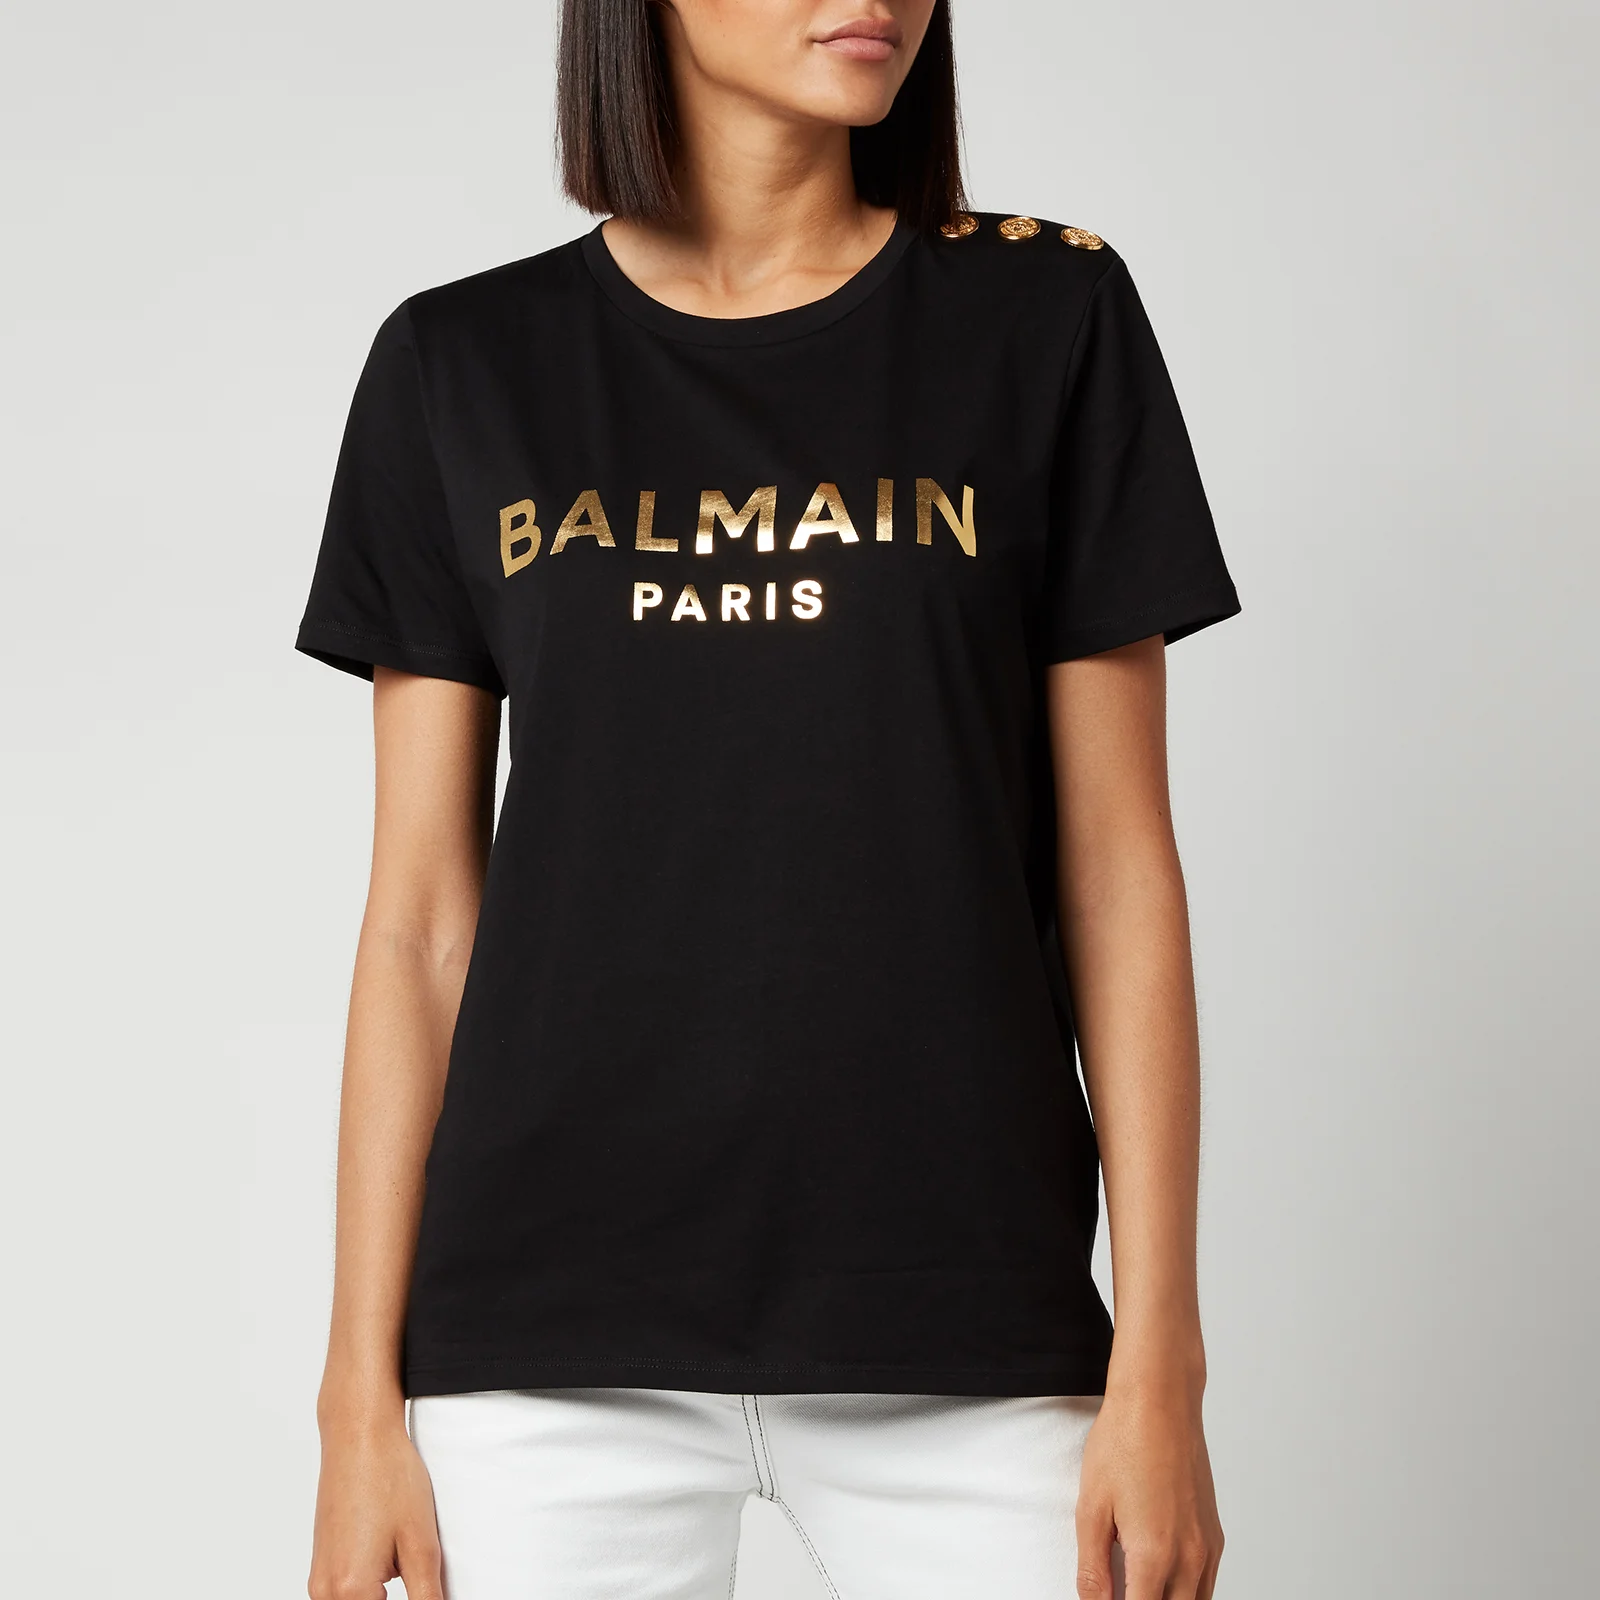 Balmain Women's Short Sleeve 3 Button Metallic Logo T-Shirt - Noir/Or Image 1